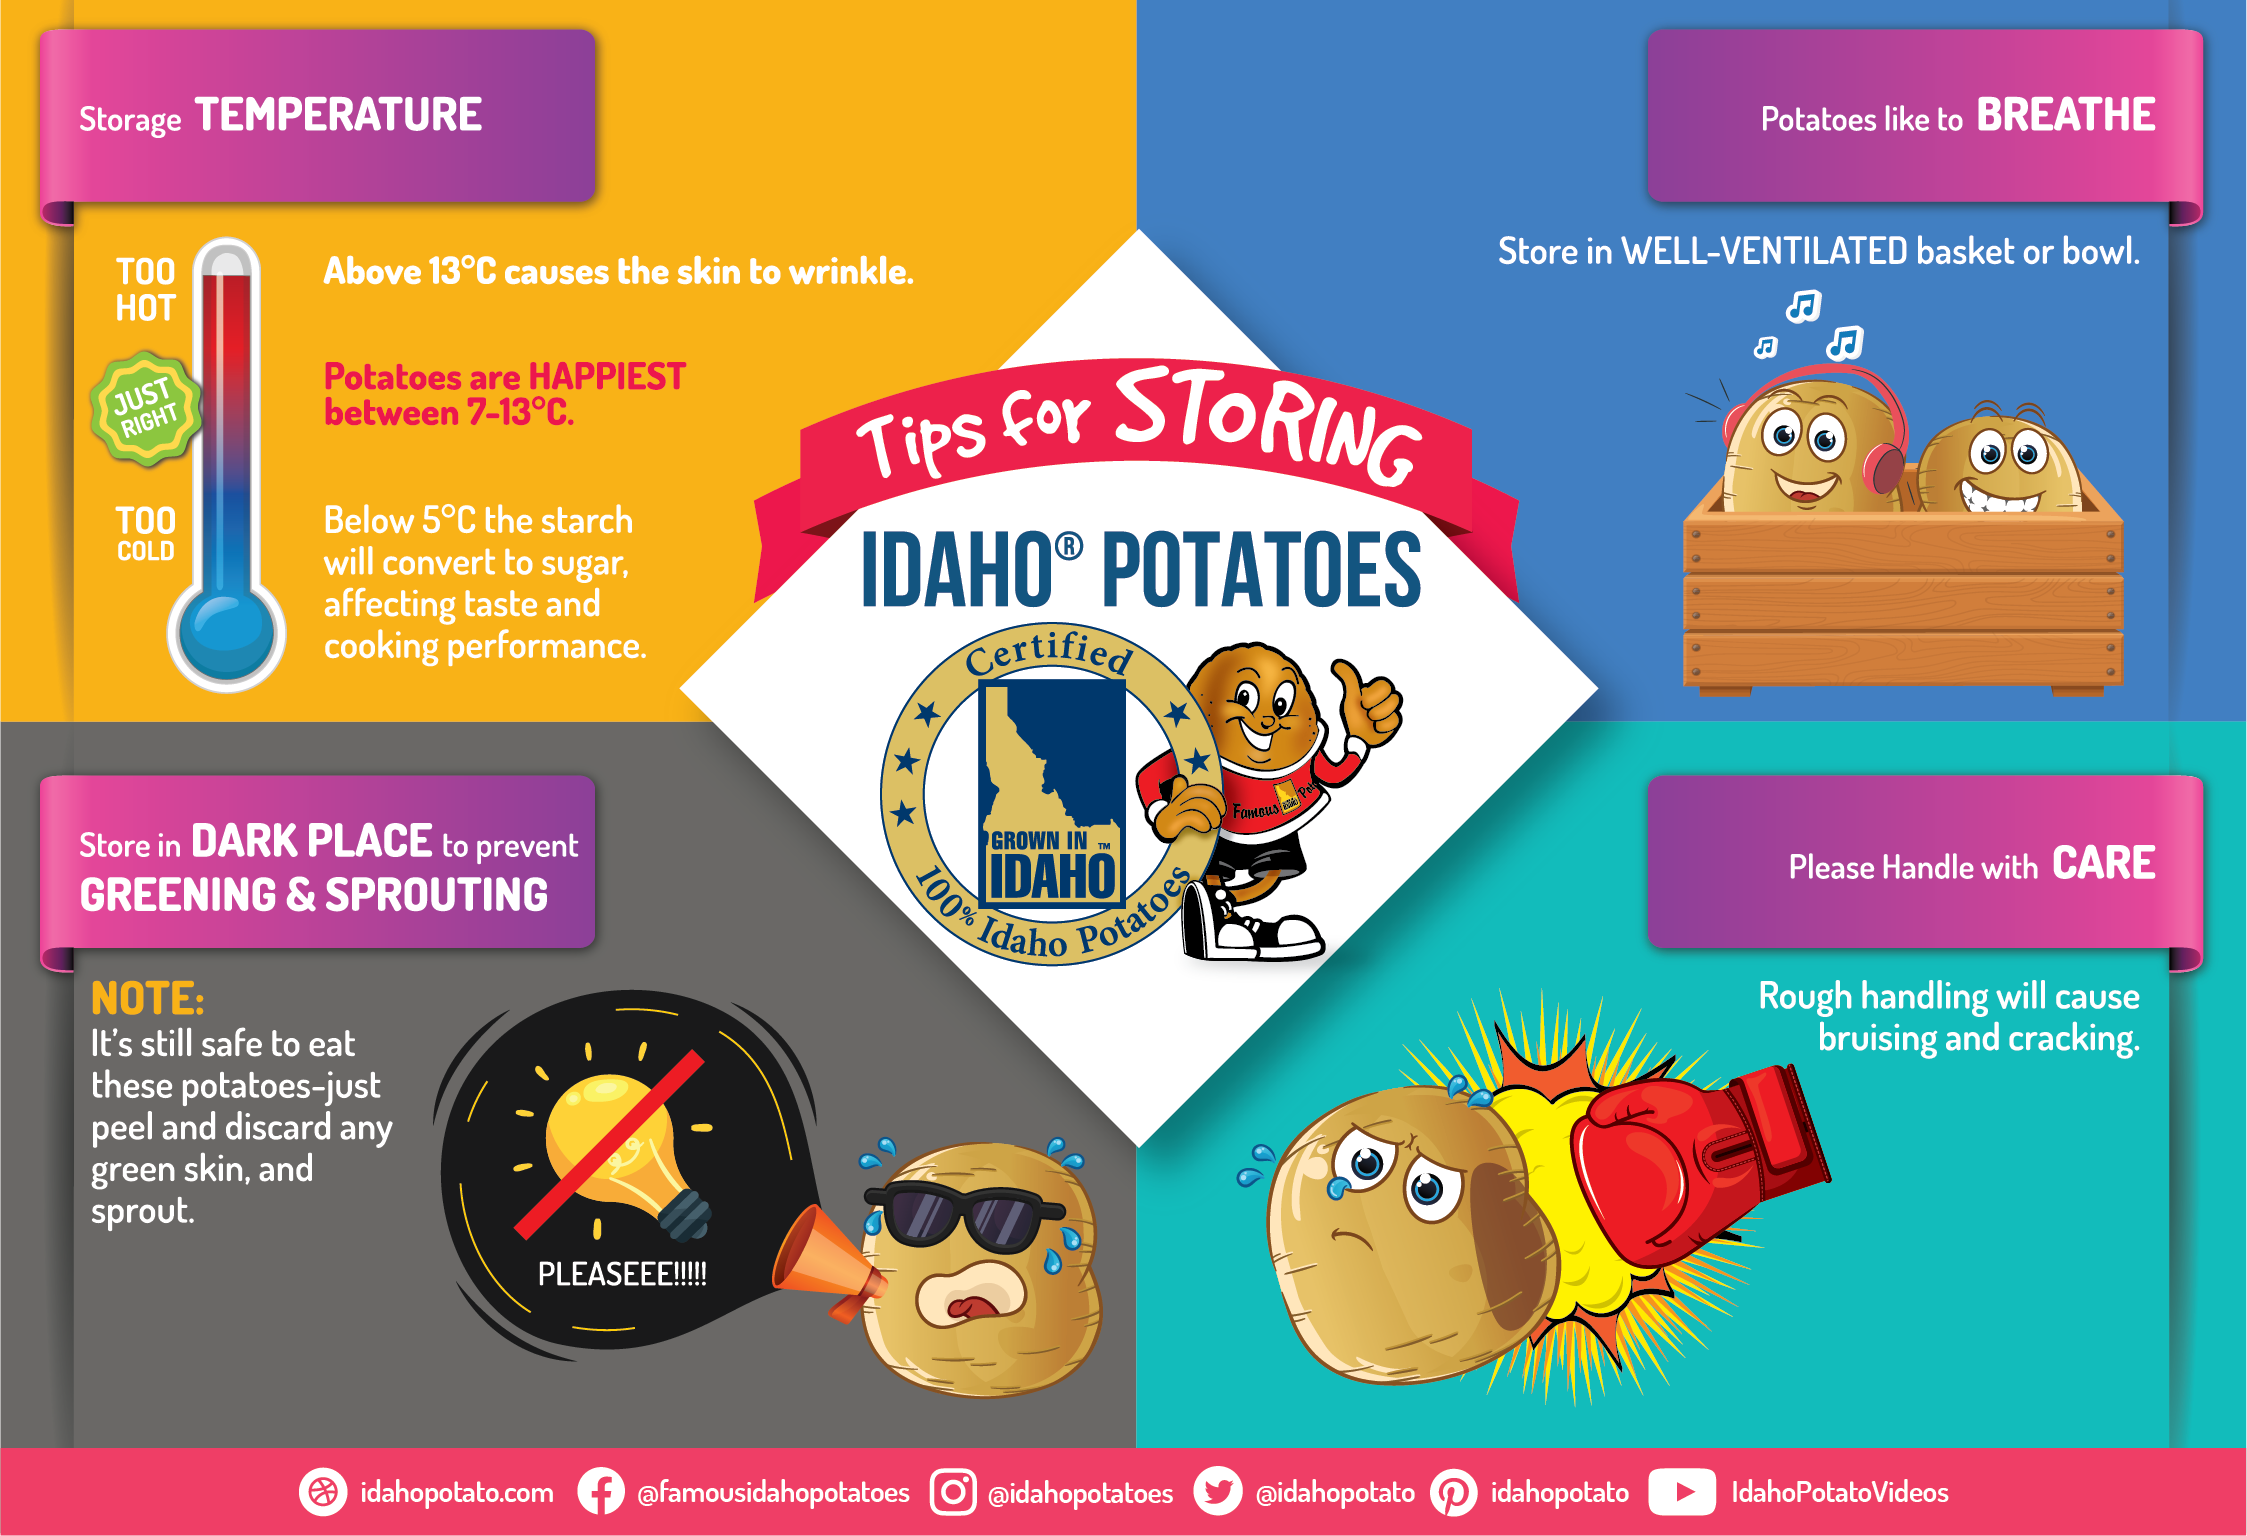 Tips For Storing Idaho® Potatoes